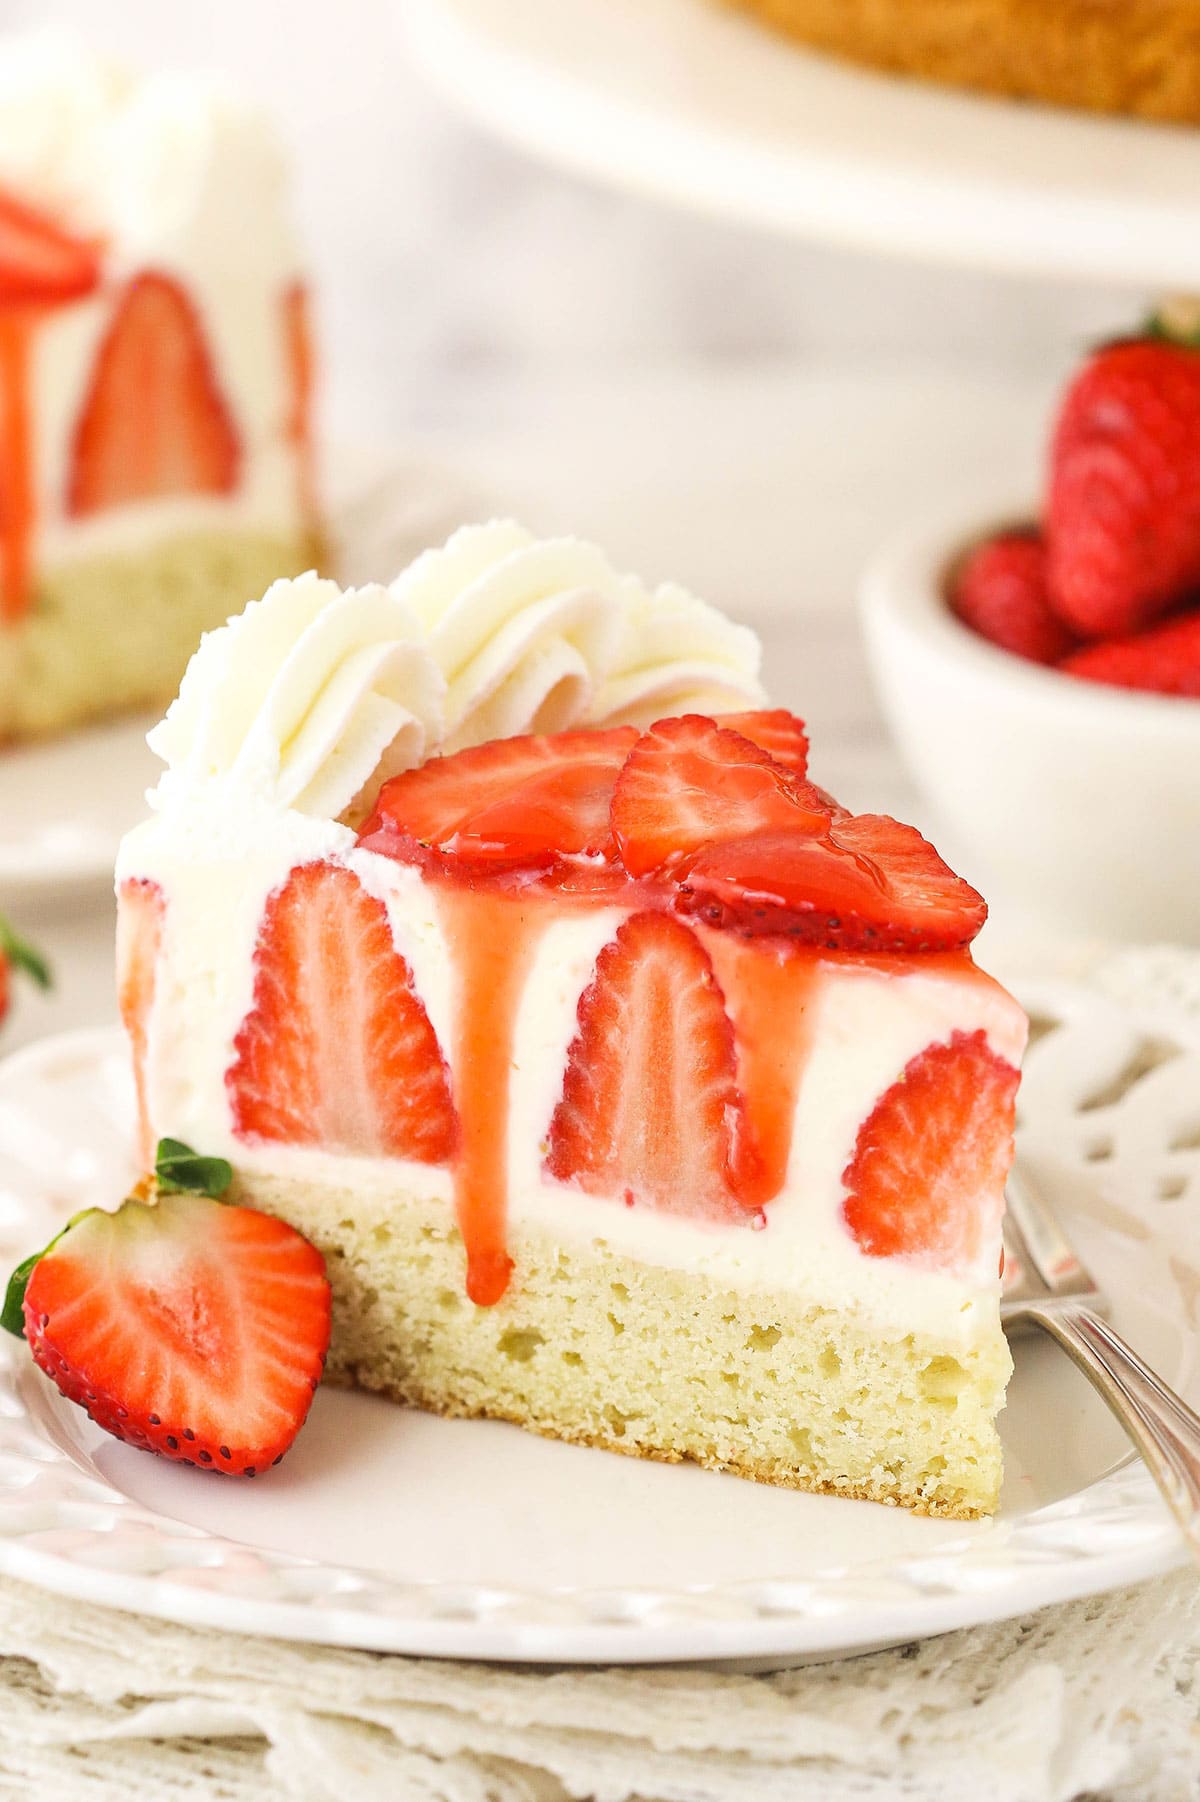 strawberry cheesecakes recipes